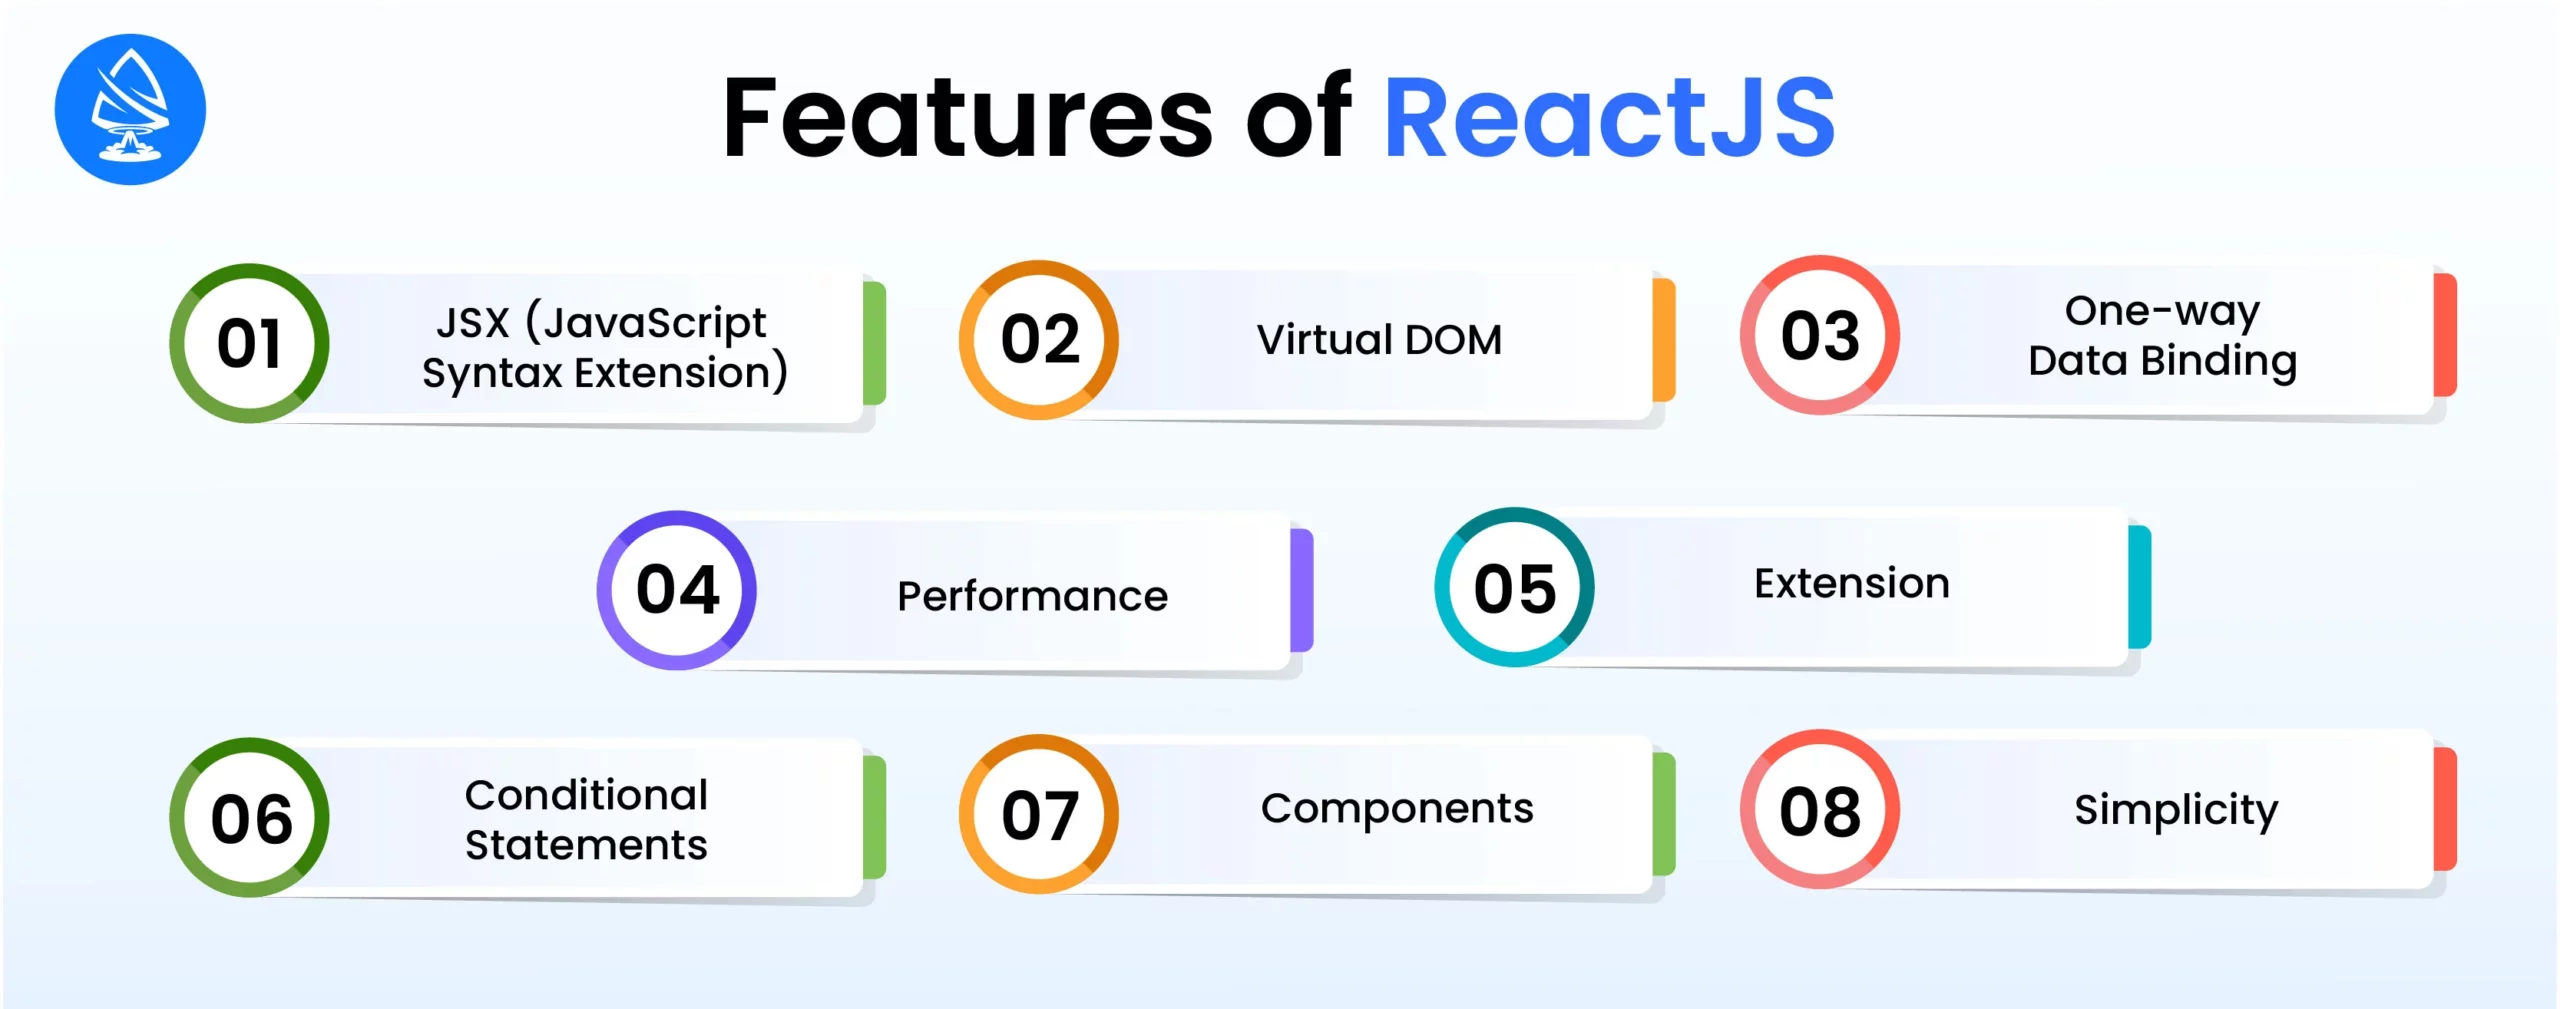 Features of ReactJS 